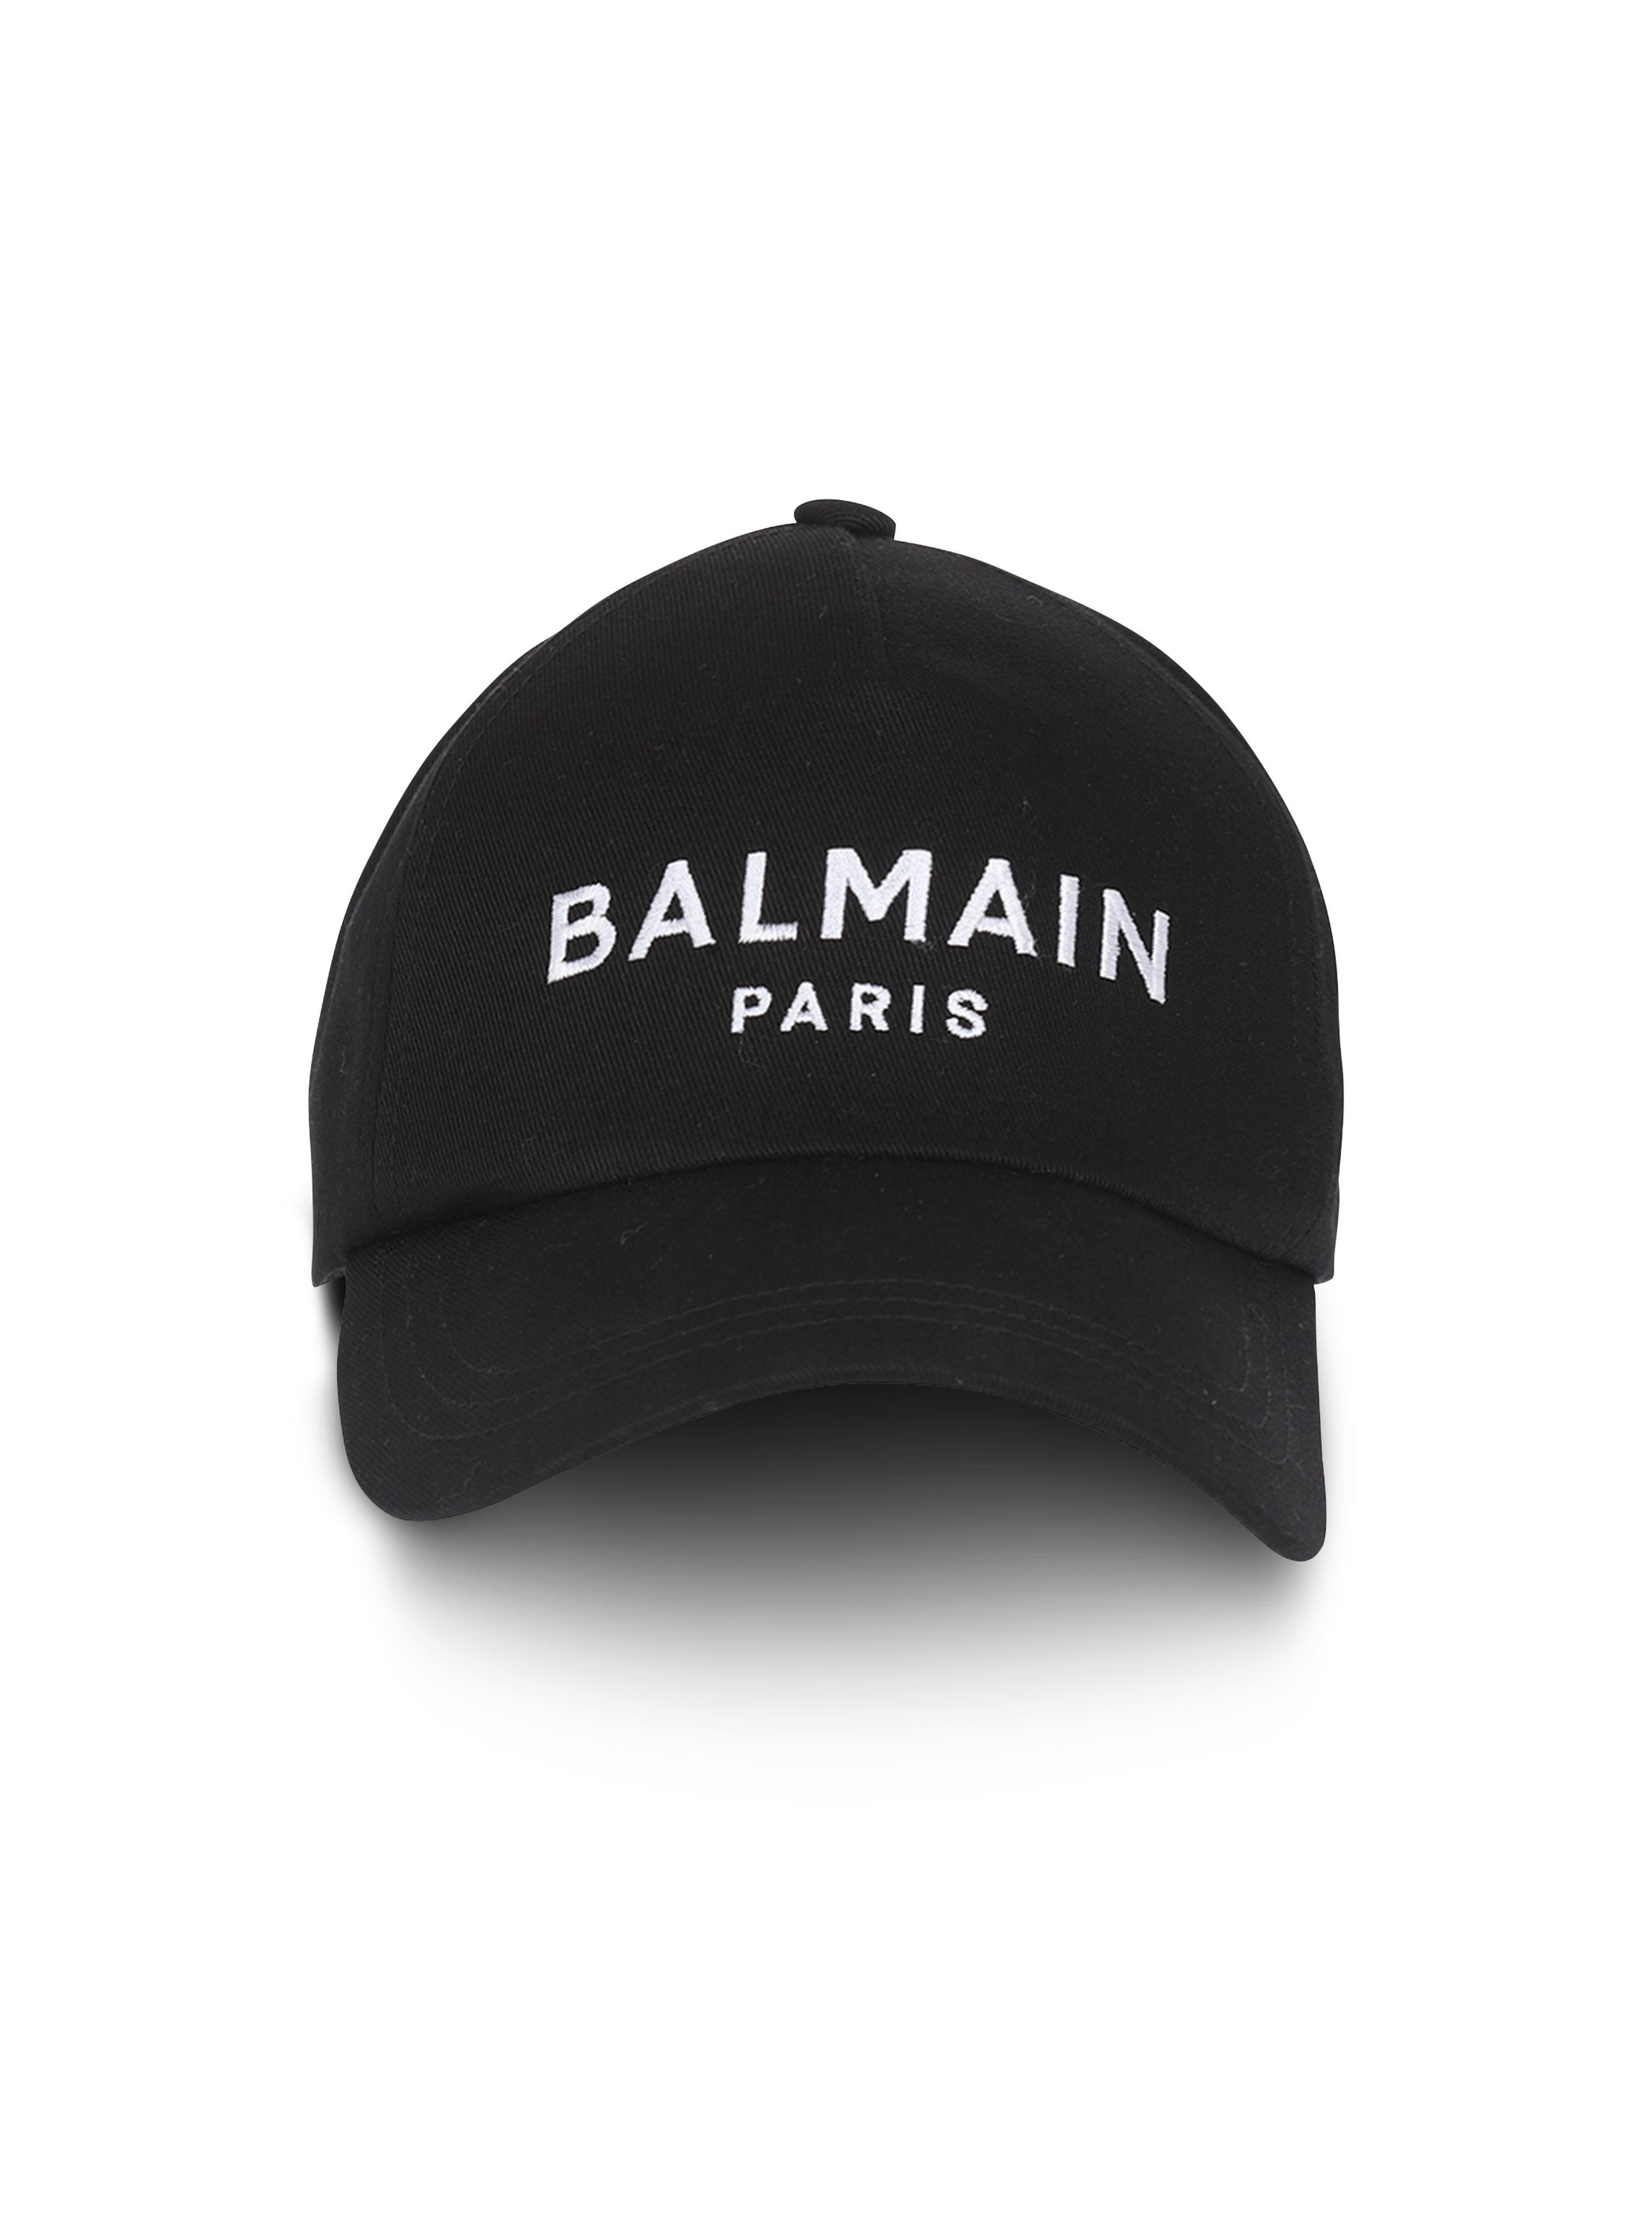 Cotton cap with Balmain Paris logo, black, hi-res